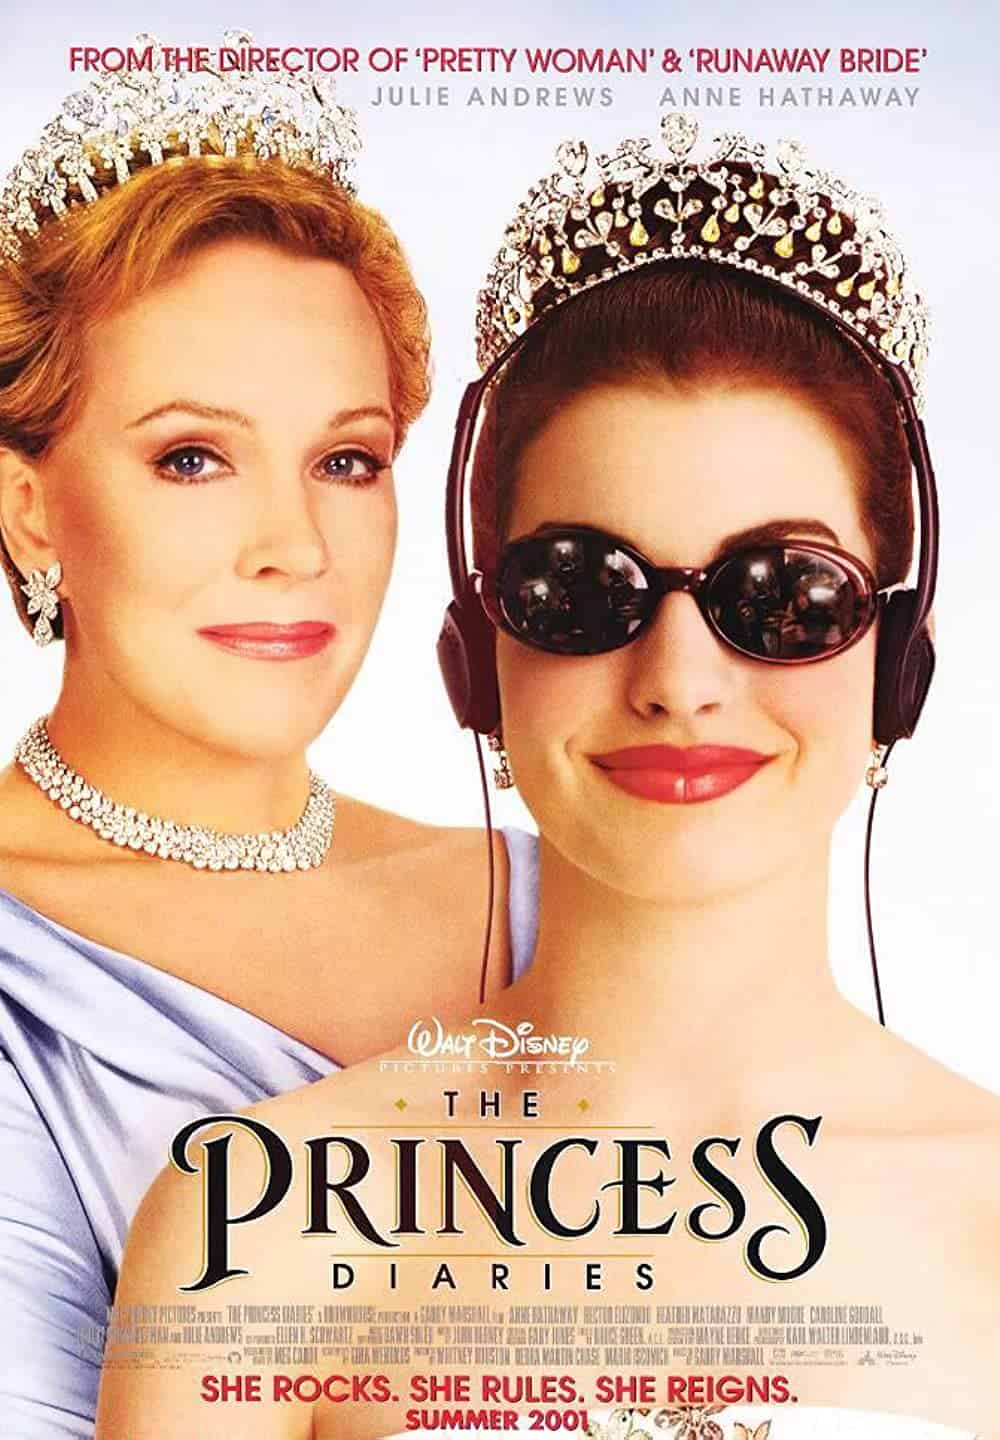 The Princess Diaries (2001) Best Princess Movies